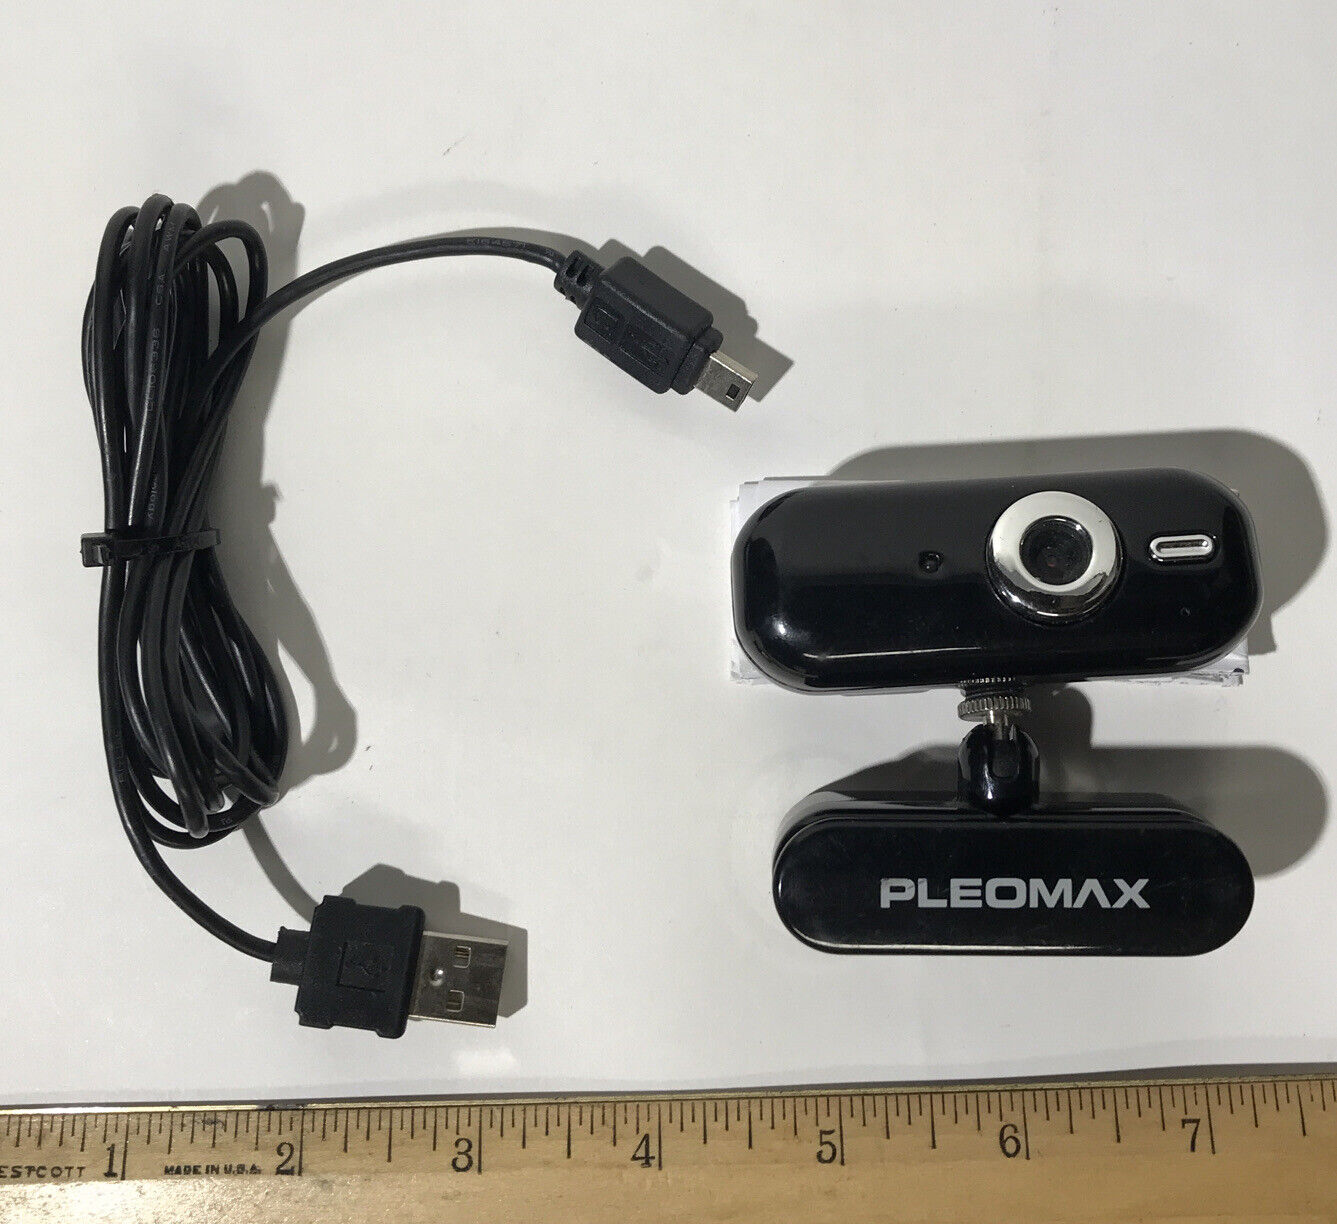 Samsung Pleomax Pleo Cam I PWC-3800 Web Camera Series